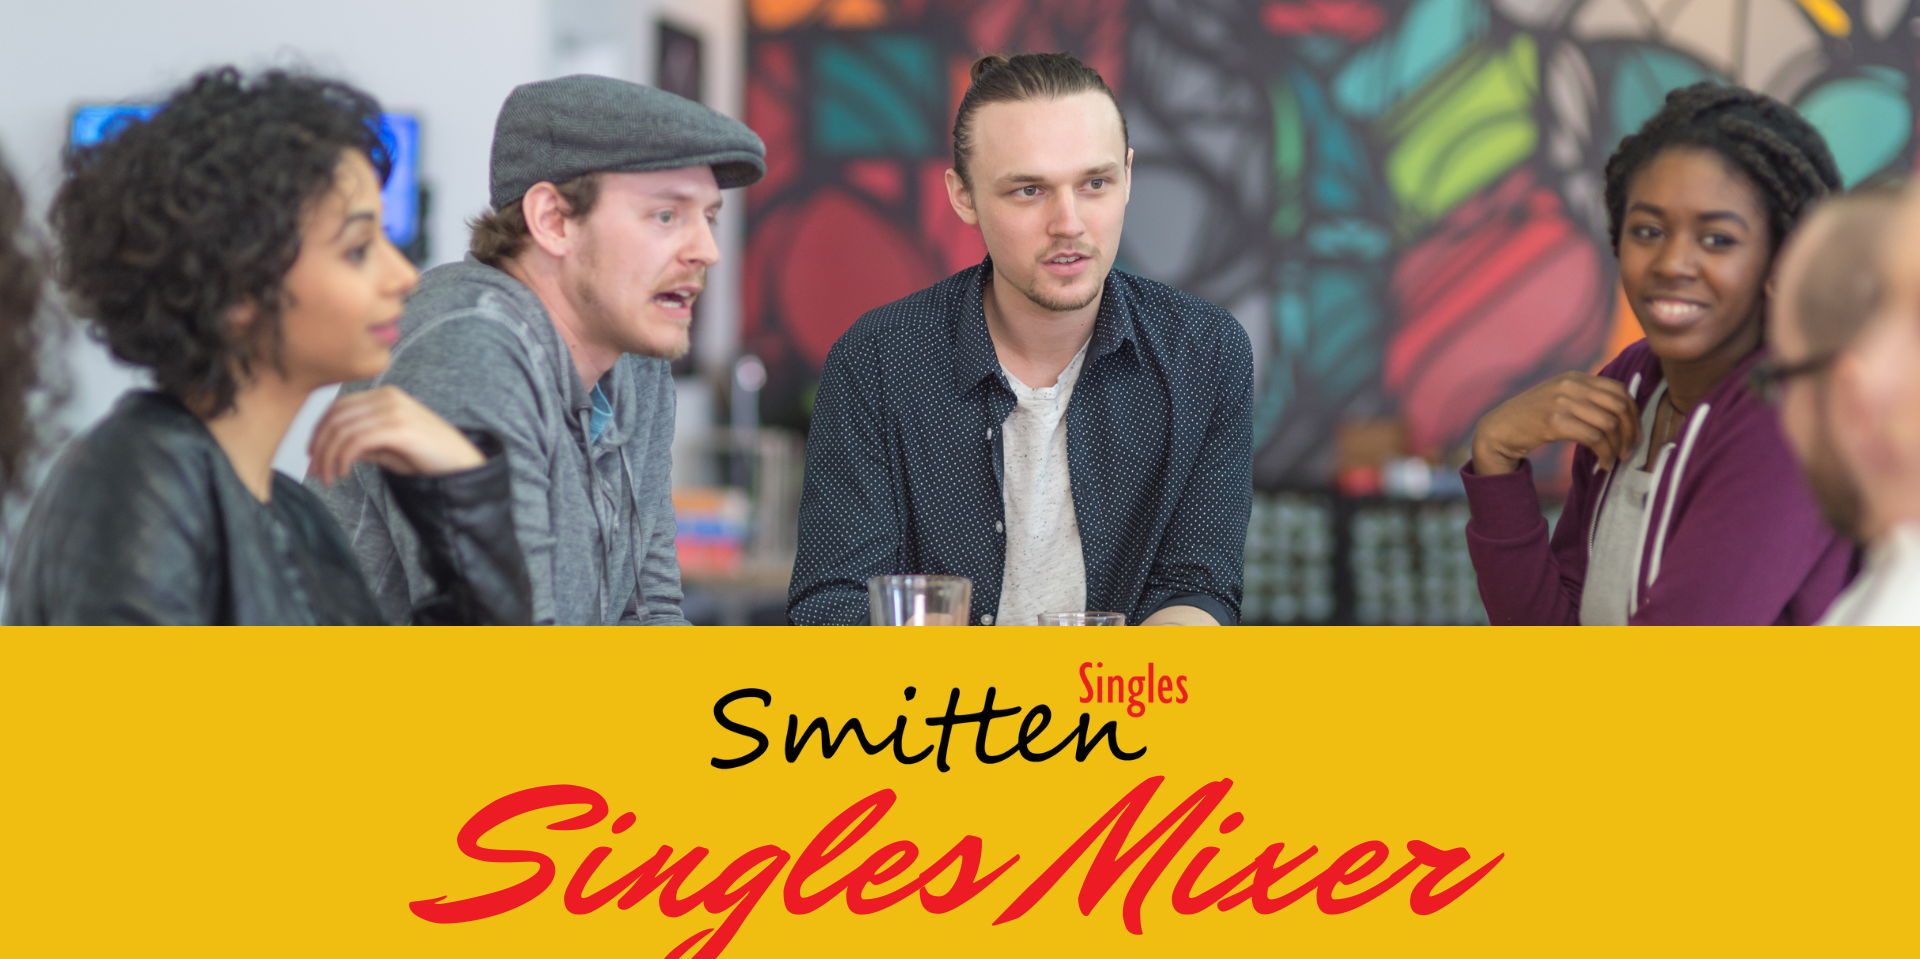 Omaha Singles Mixer promotional image